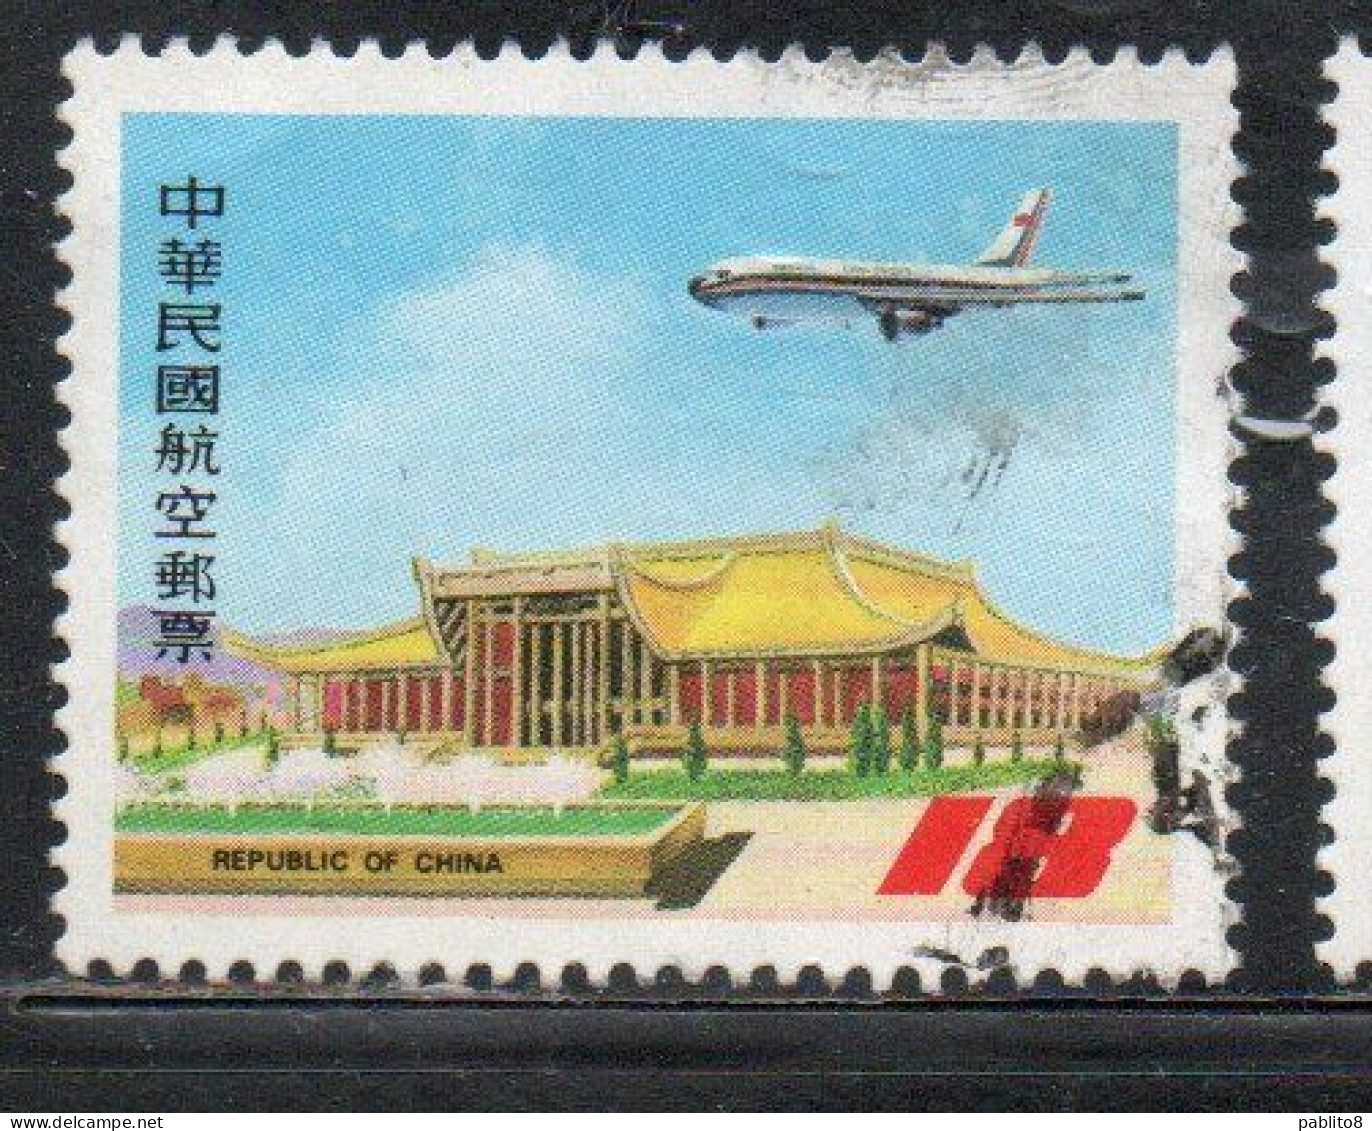 CHINA REPUBLIC CINA TAIWAN FORMOSA 1984 AIR POST MAIL AIRMAIL CIVIL AERONAUTICS ADMINISTRATION SUN YAT-SEN 18$ USED - Airmail